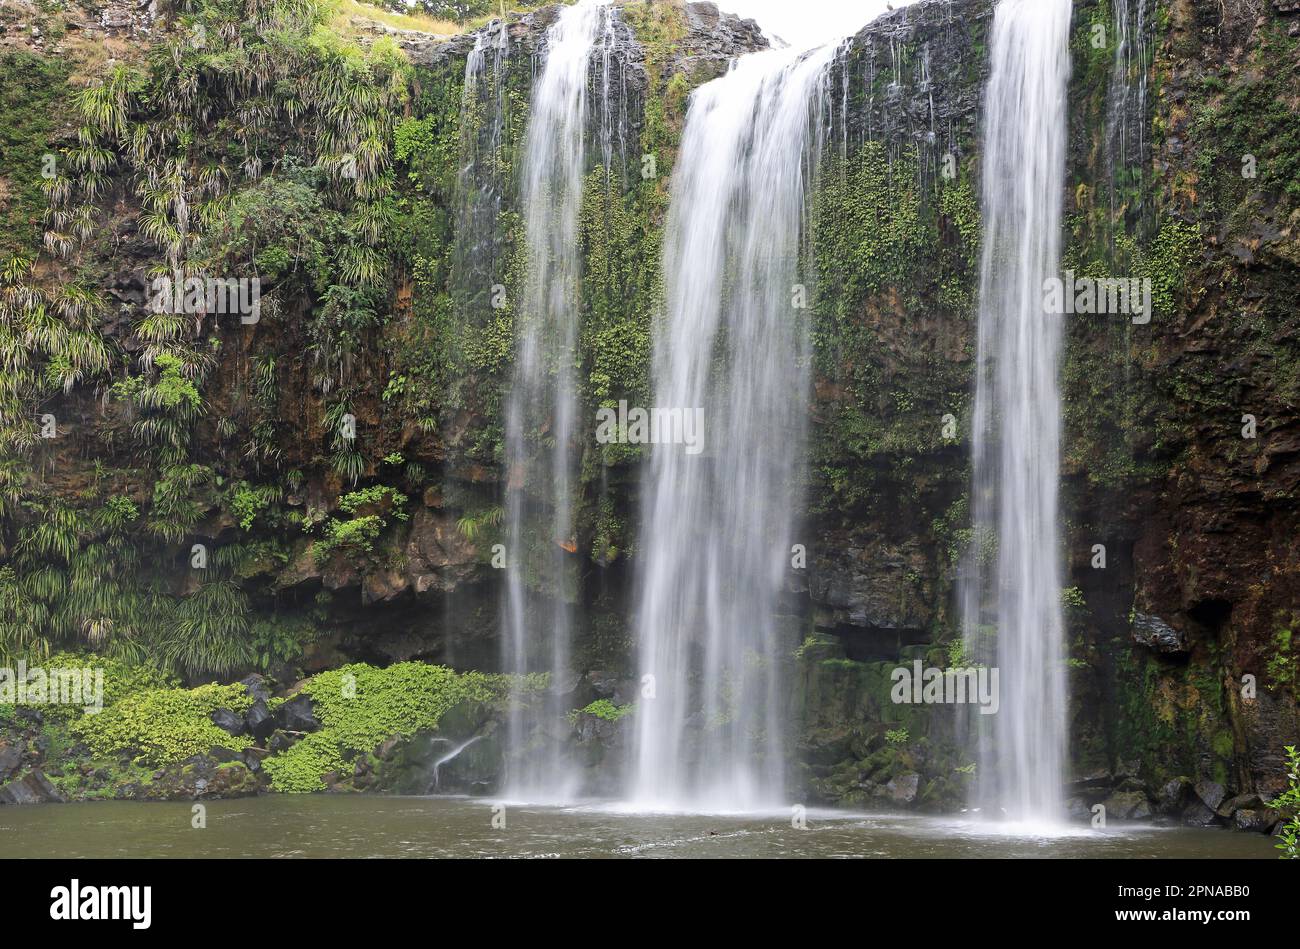 Cliffs and Whangarei Falls - New Zealand Stock Photo